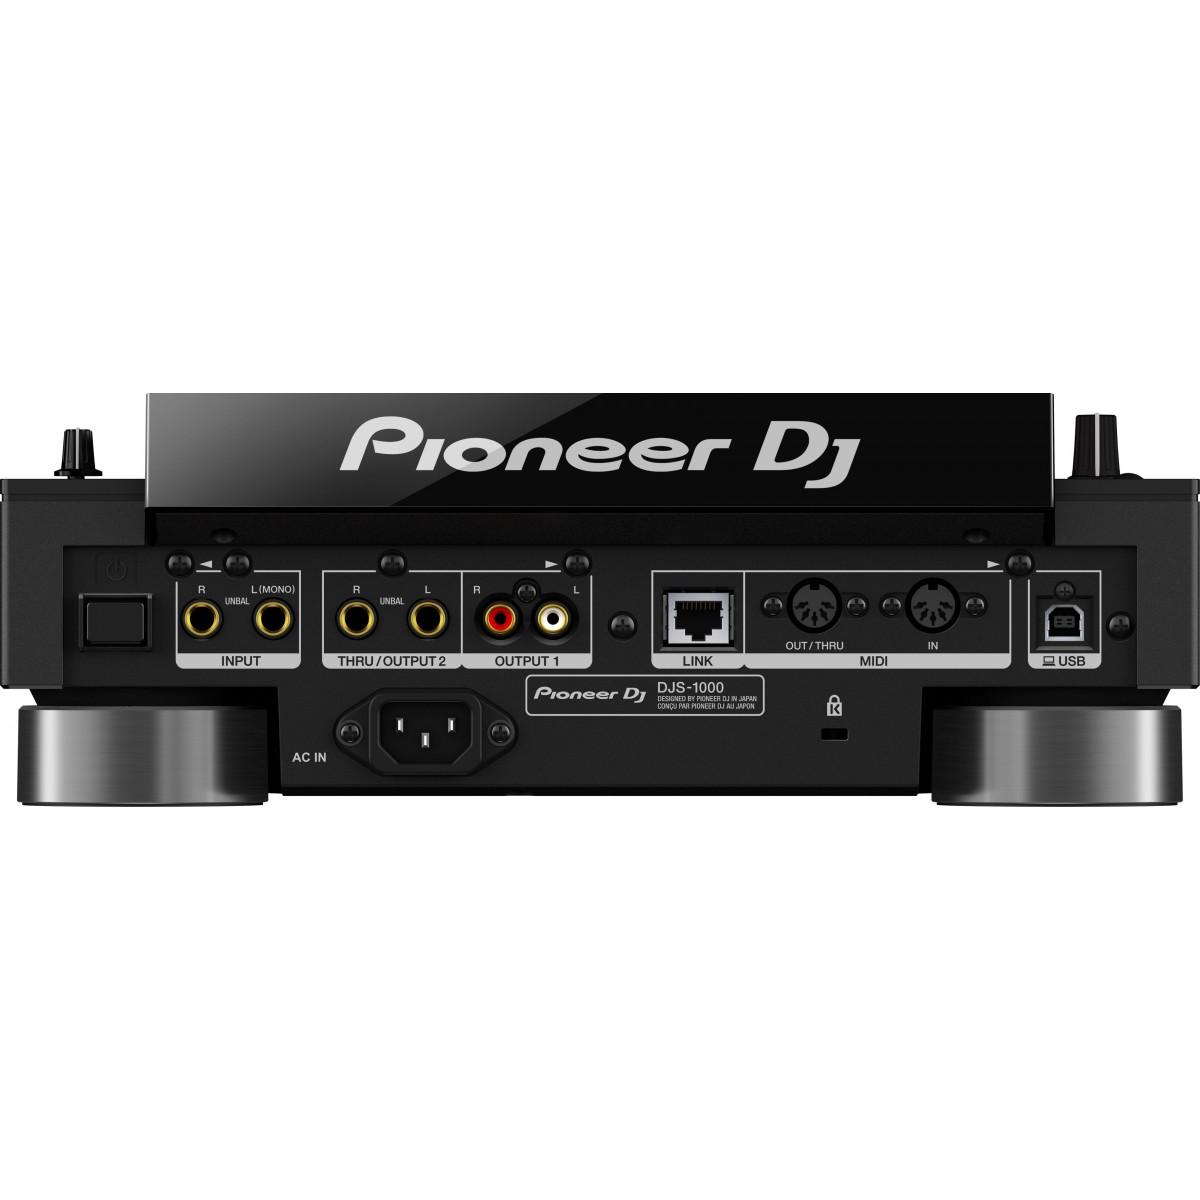 Pioneer DJ Stand Matériel DJ - Pioneer DJ Sonorisation, Deejay, HomeStudio,  Flight Case:  revendeur agrée de Stands DJ